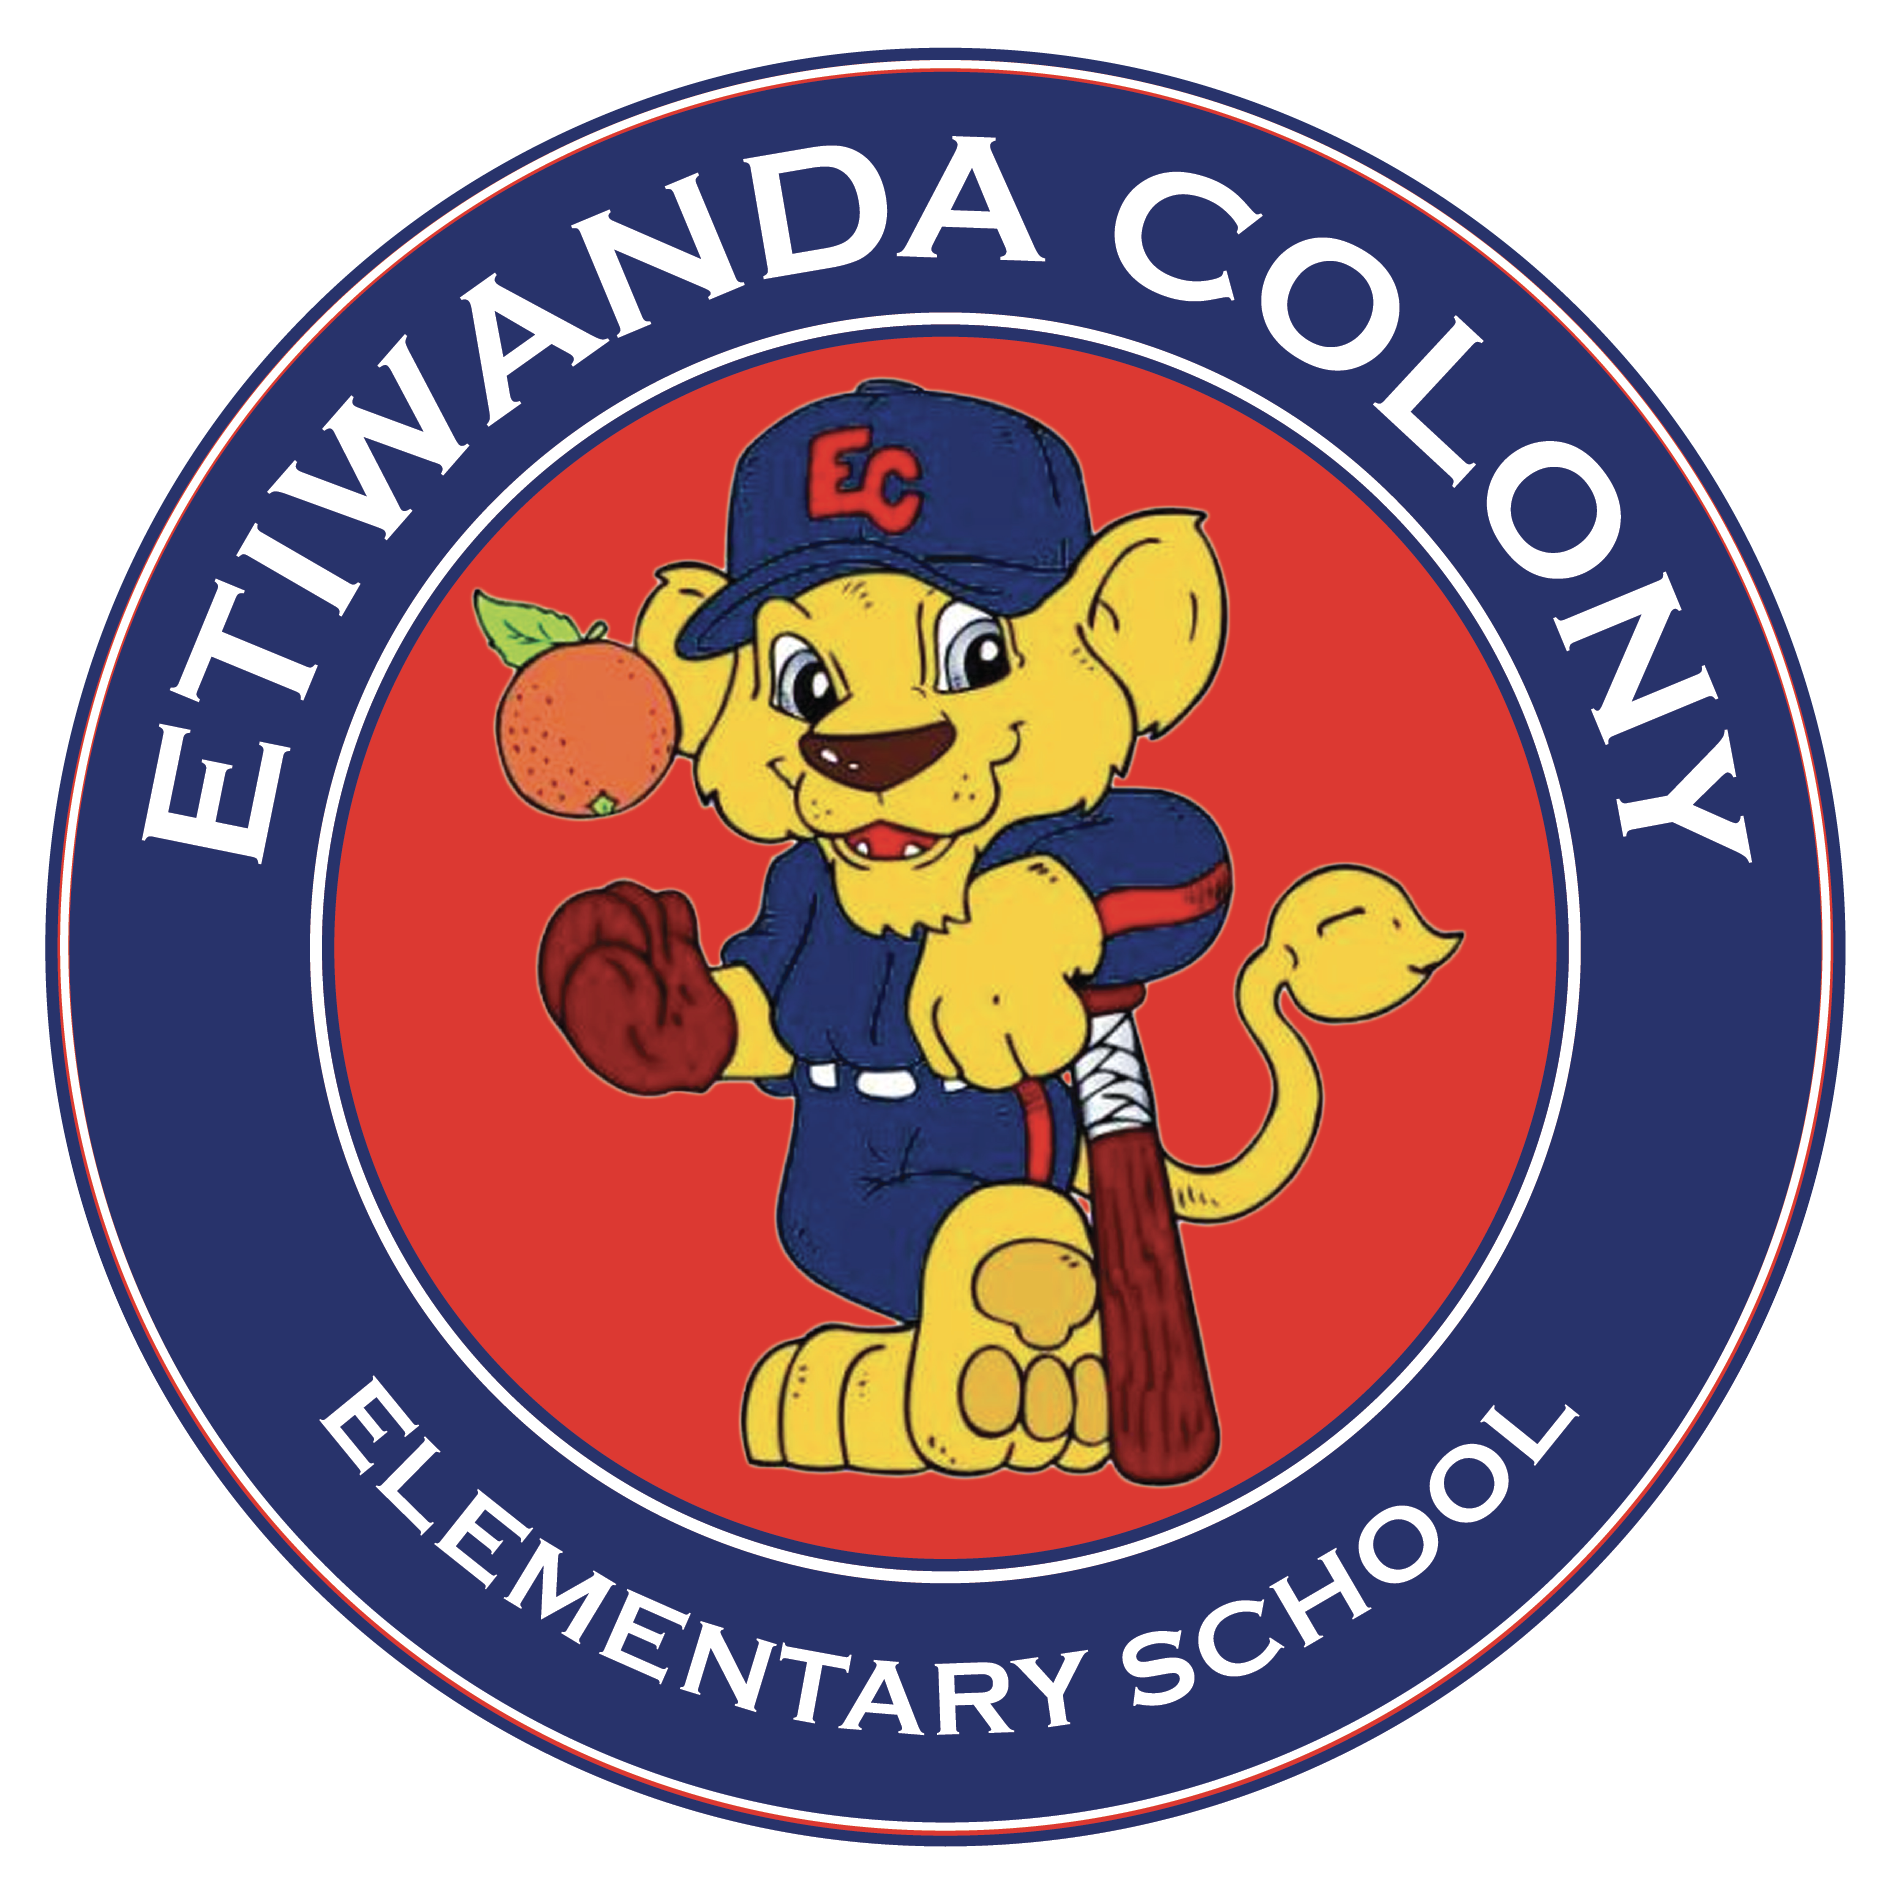 Etiwanda Colony Elementary School